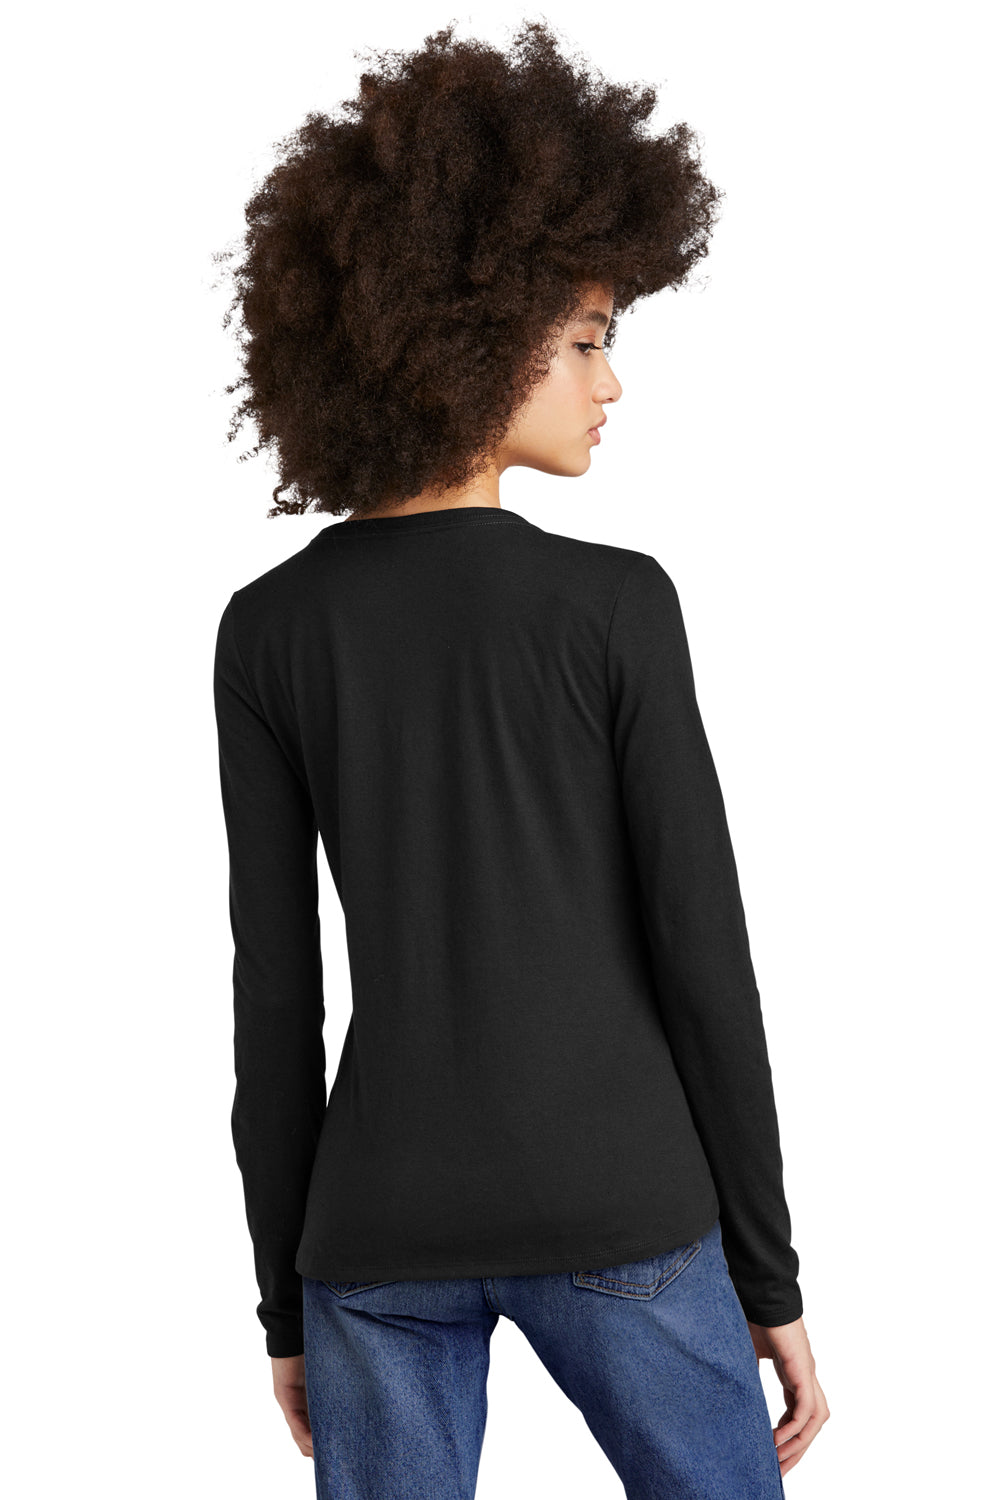 District DT135 Womens Perfect Tri Long Sleeve V-Neck T-Shirt Black Back